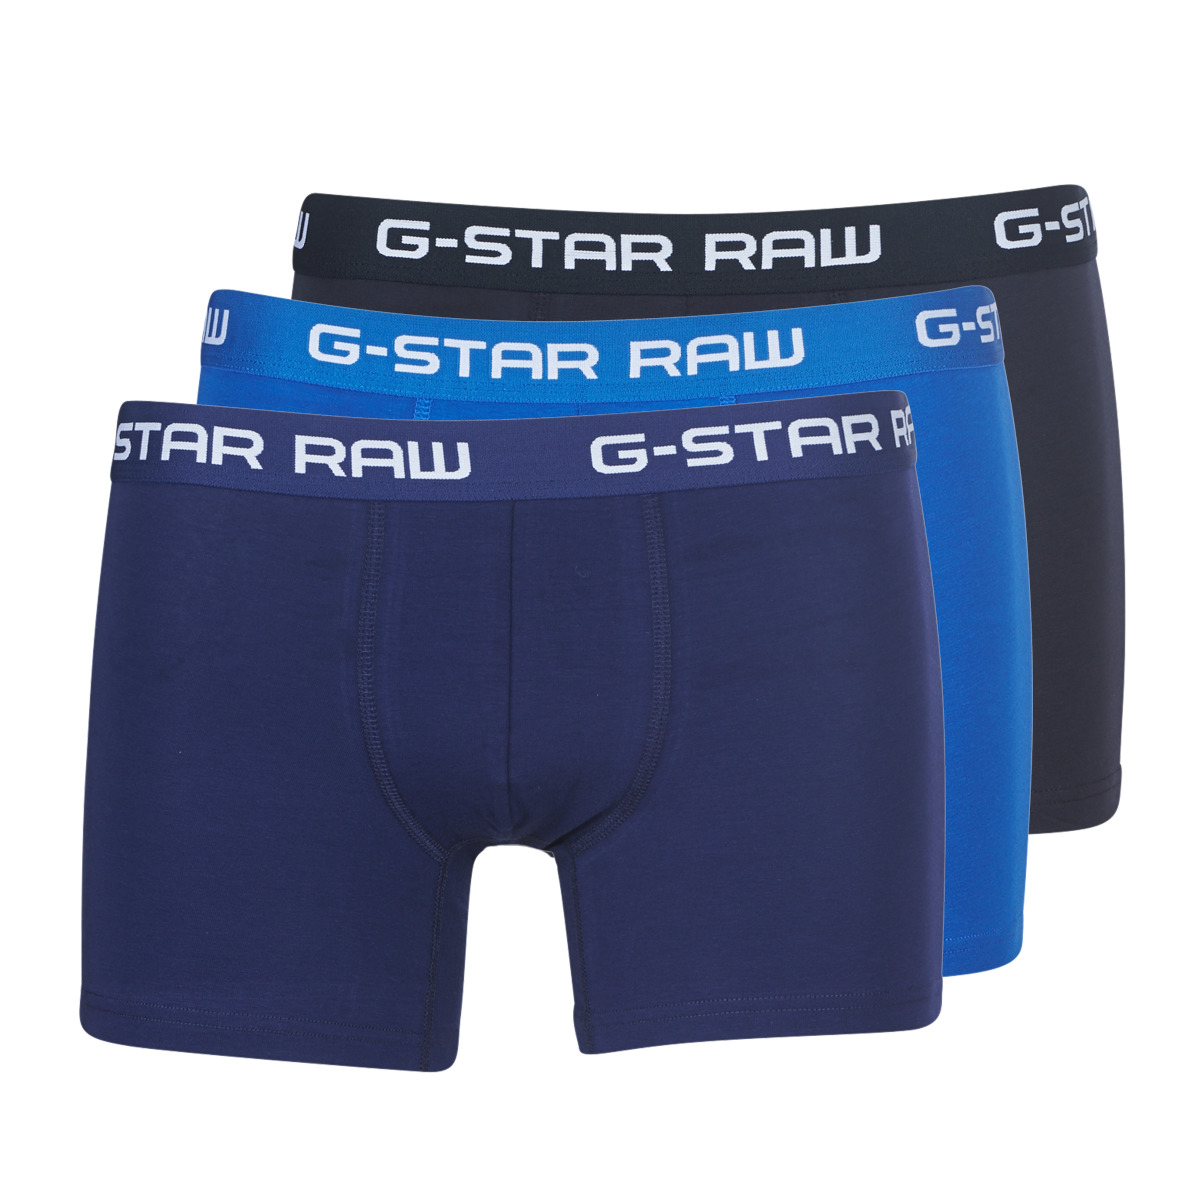 G-Star Raw Noir / Marine / Bleu CLASSIC TRUNK CLR 3 PACK wDN7yacd